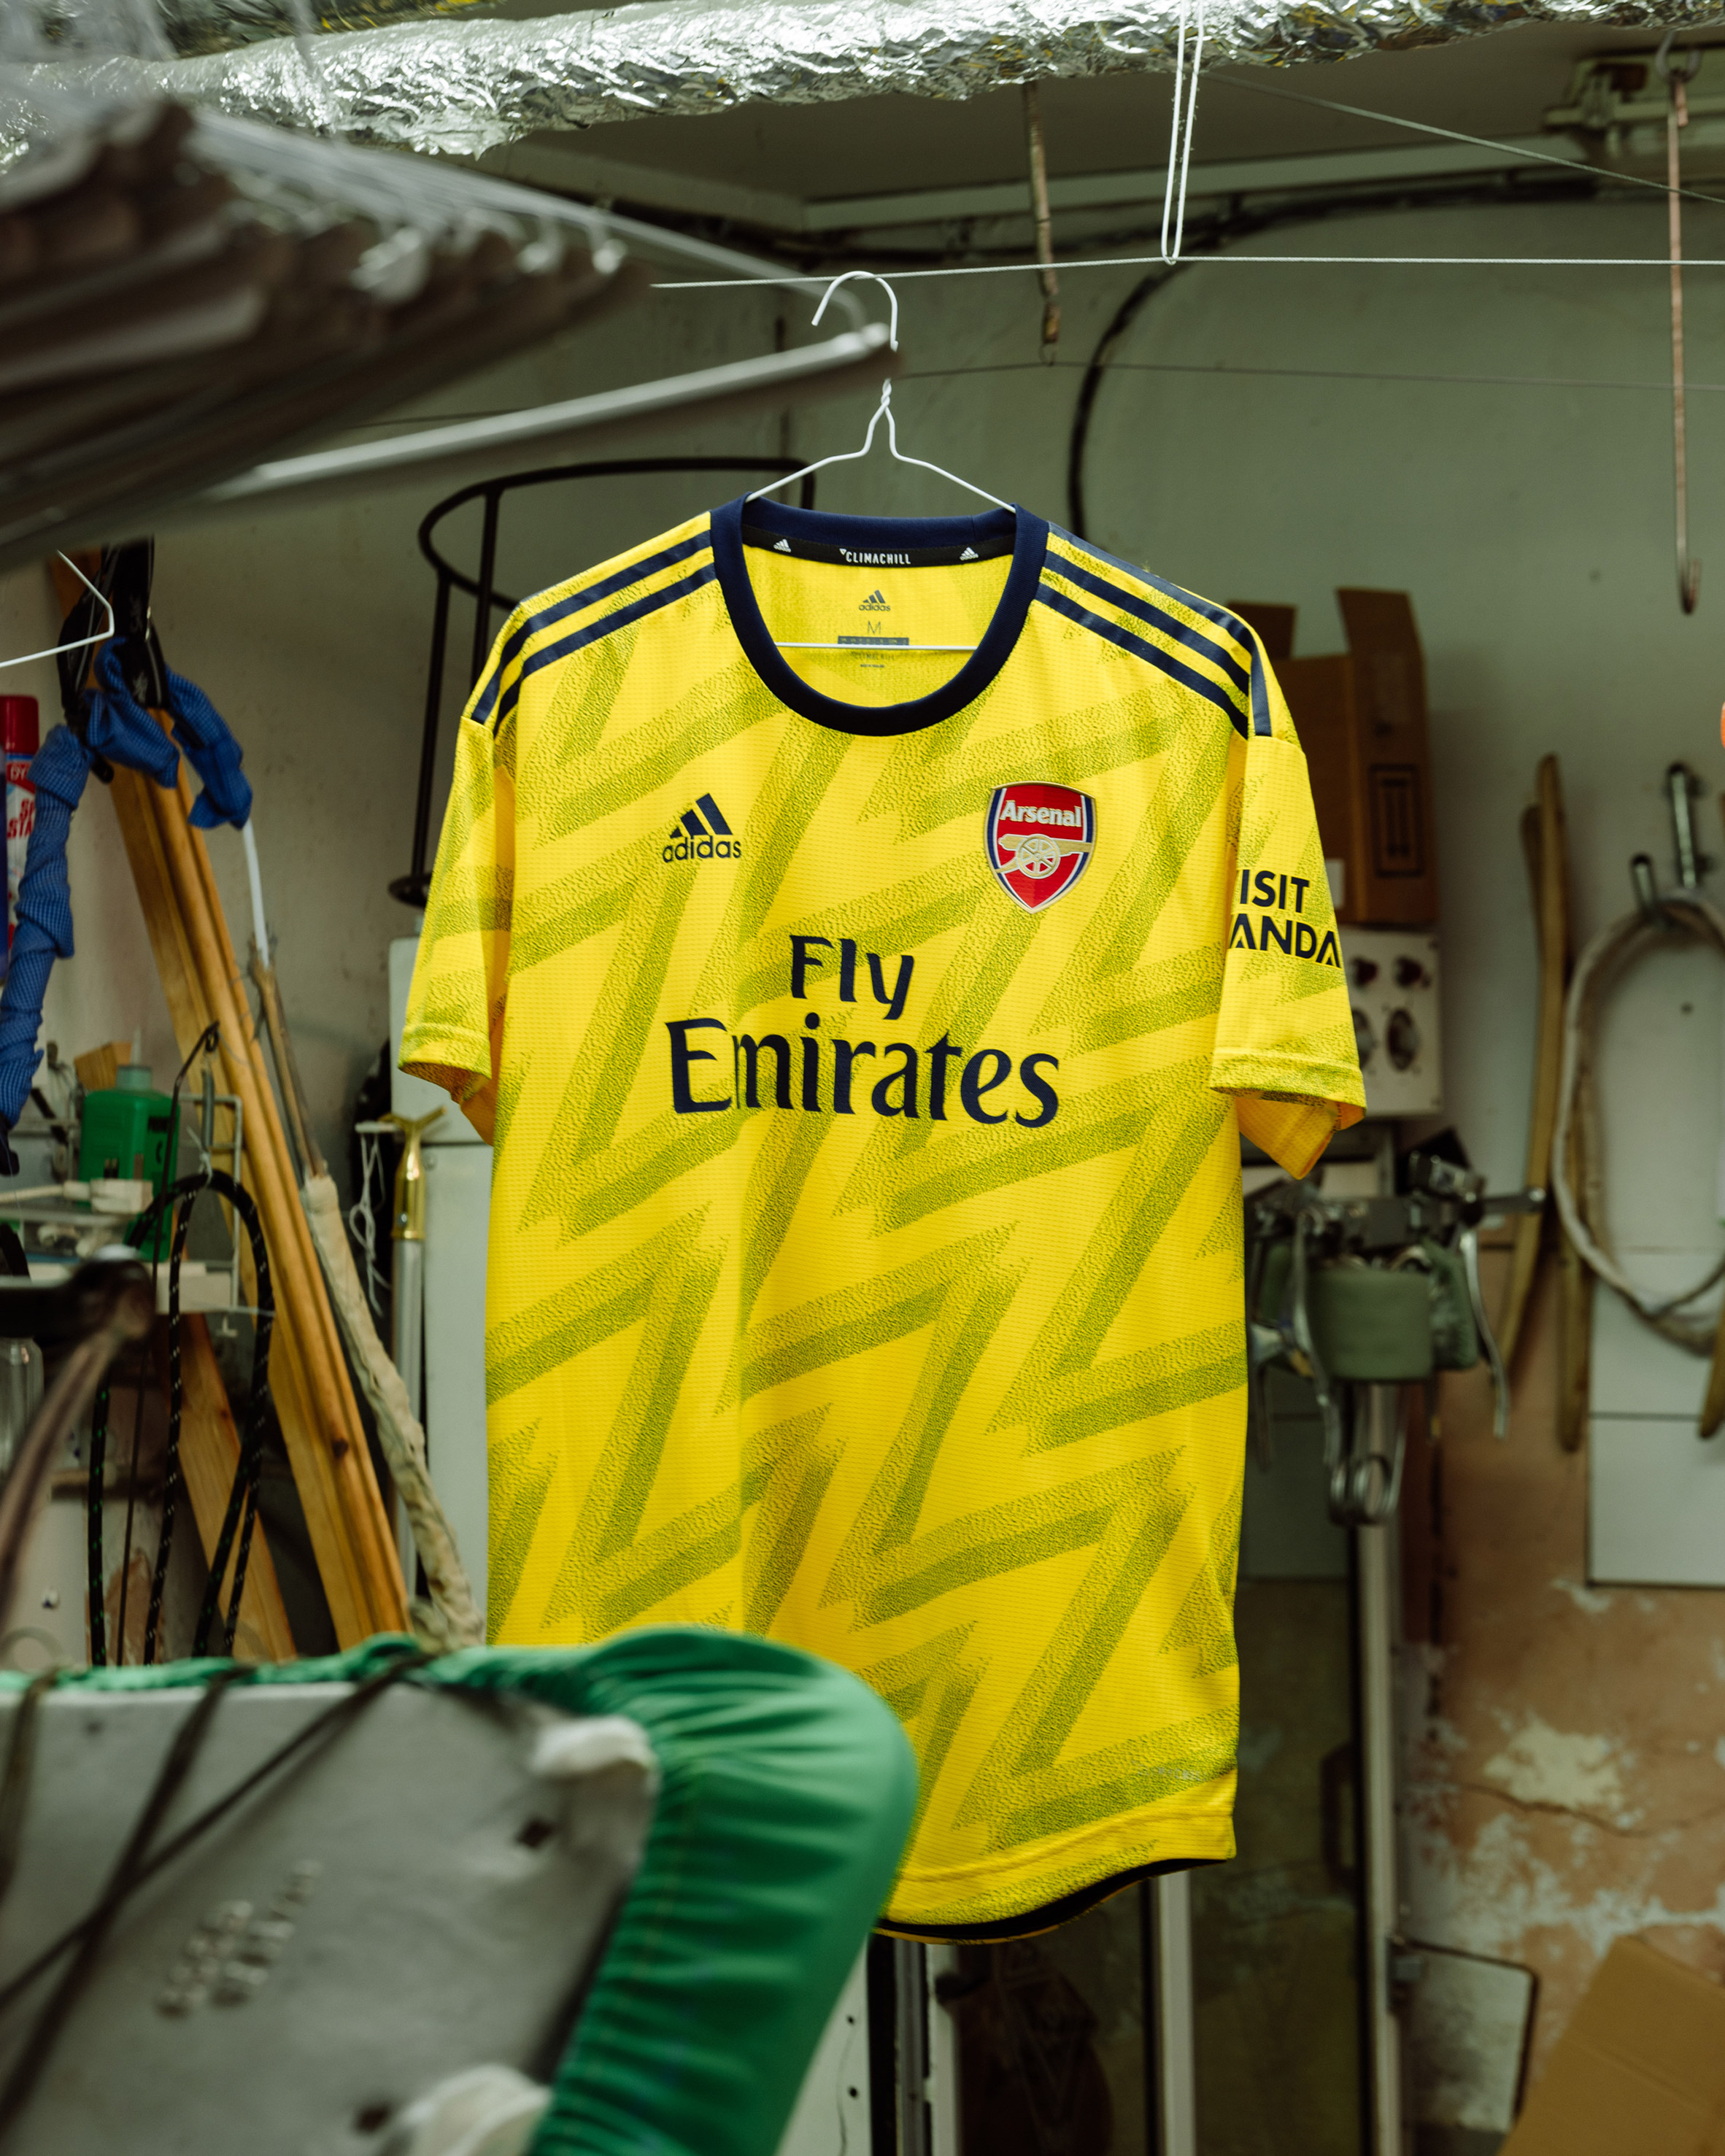 Wolk slecht ontrouw Adidas revives iconic "bruised banana" shirt for Arsenal away kit